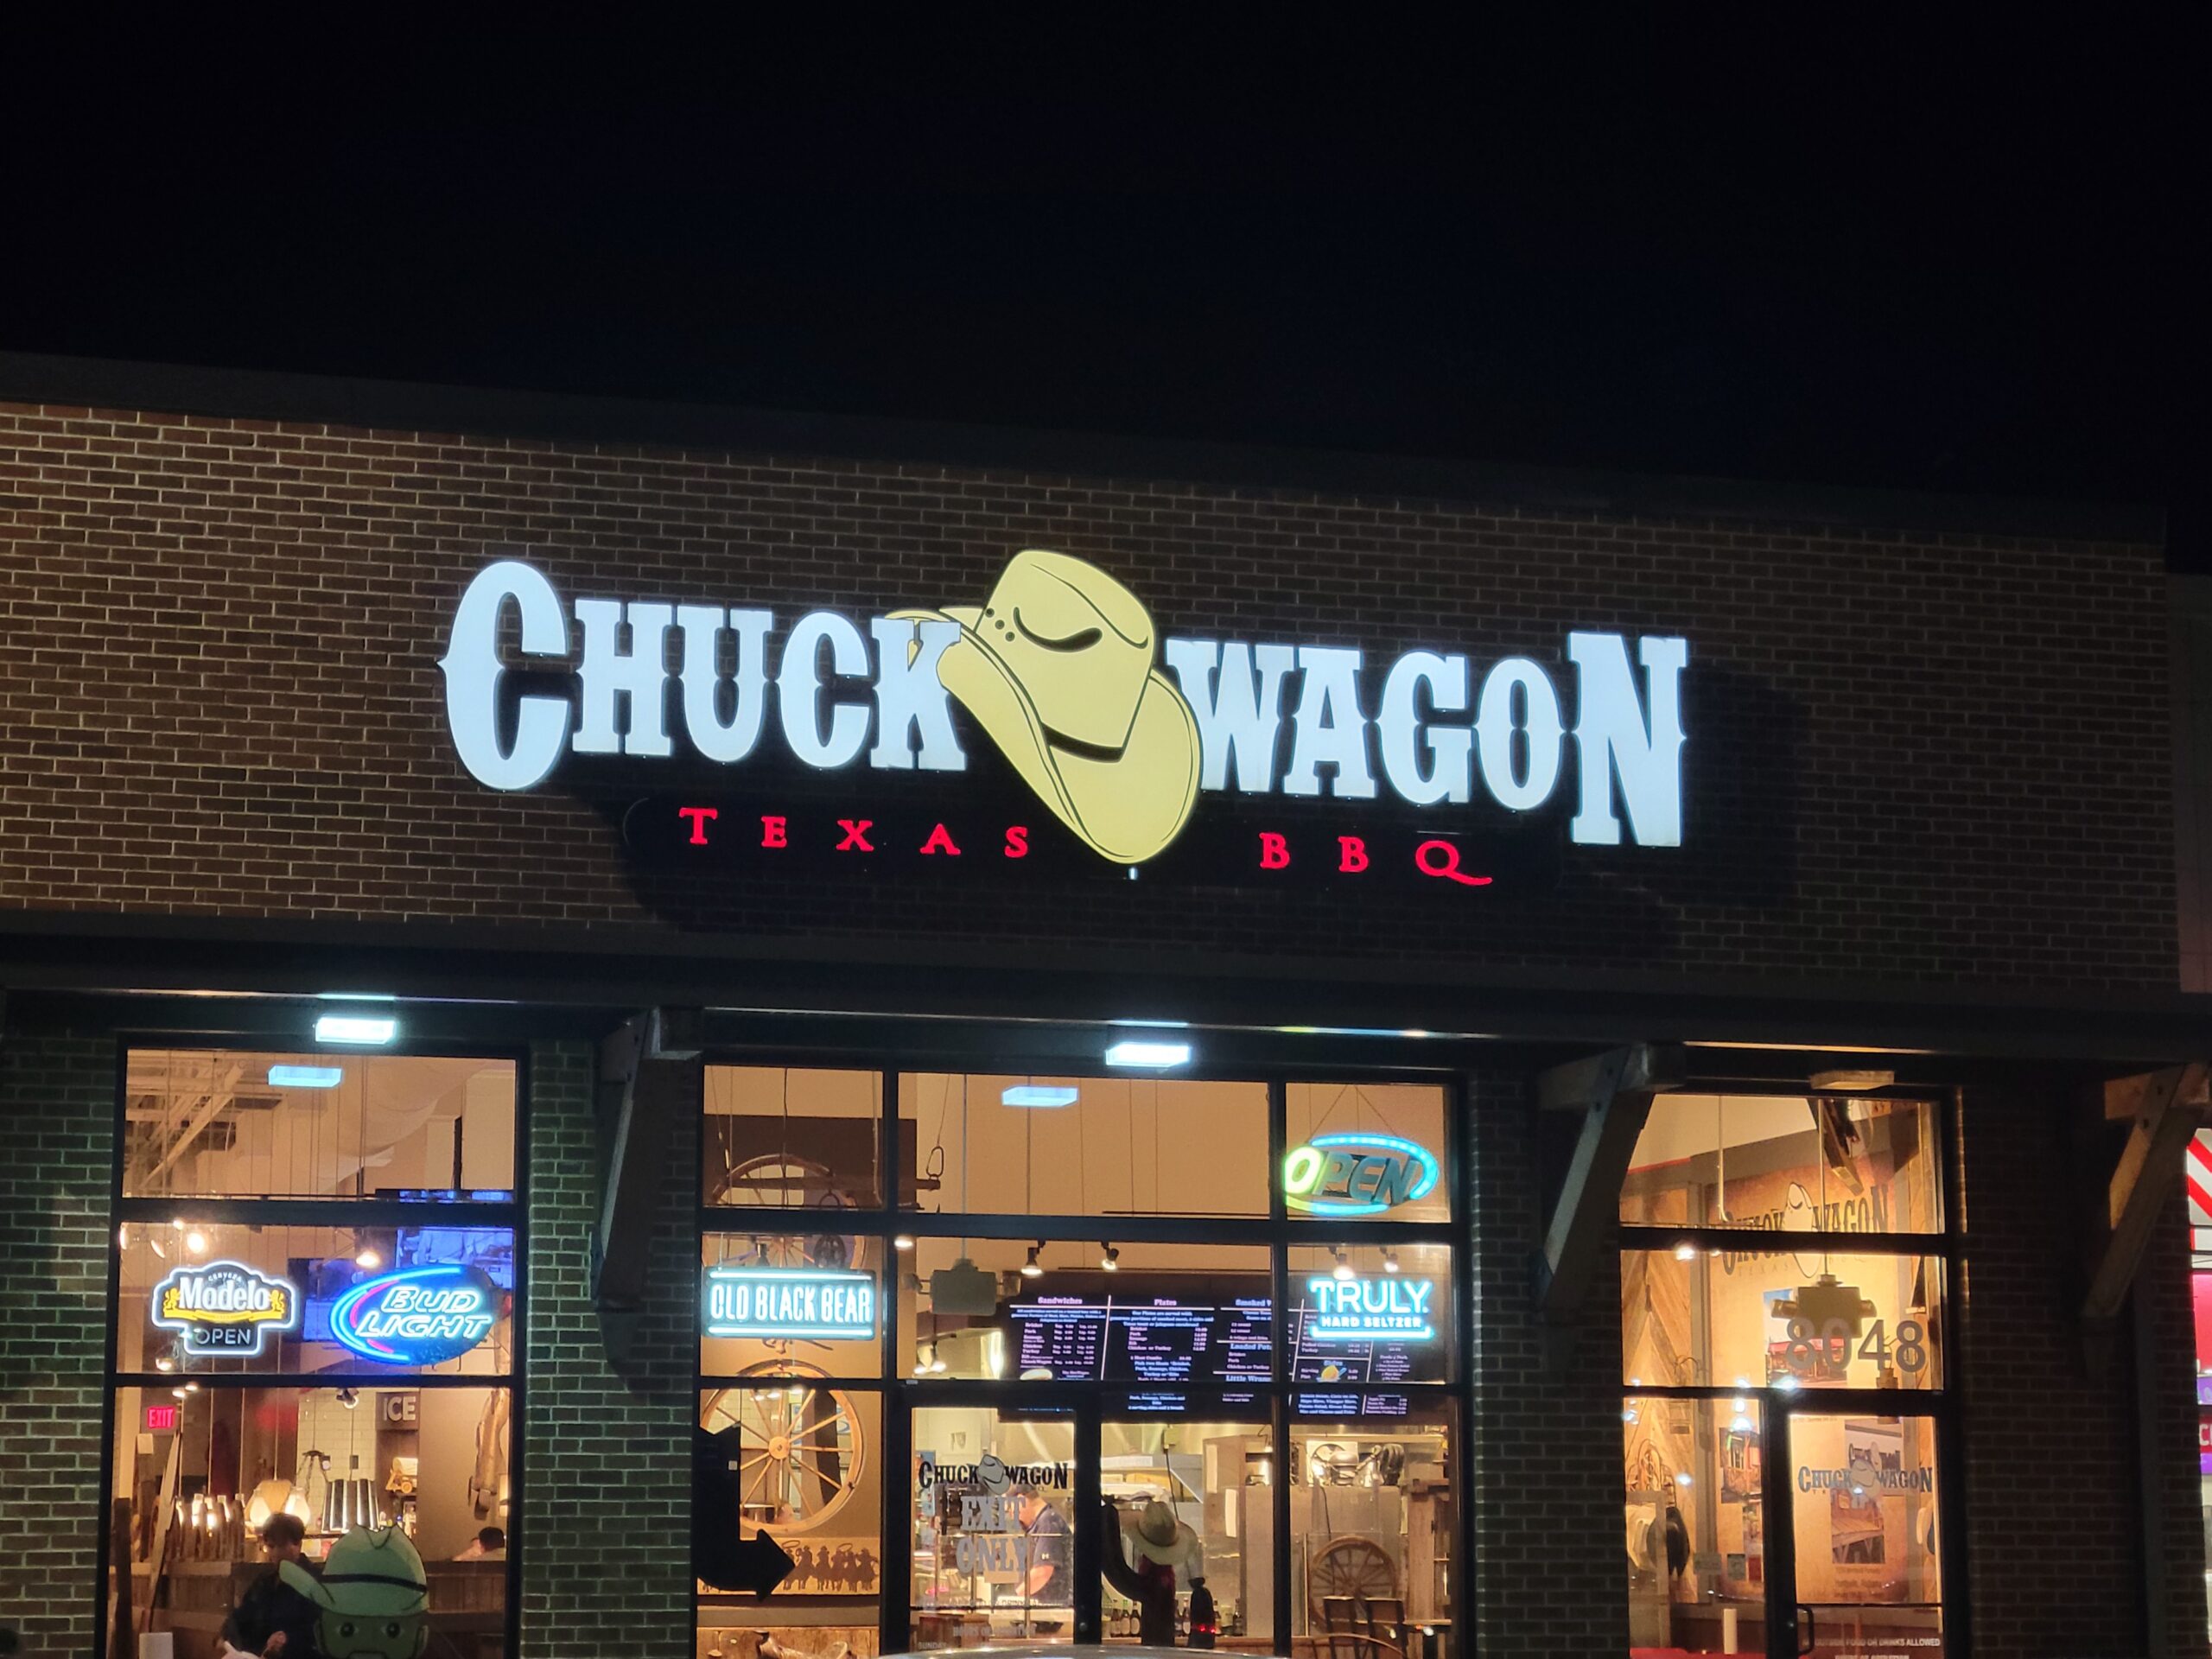 Chuckwagon BBQ Madison Alabama: Where Quantity and Quality Mingle 